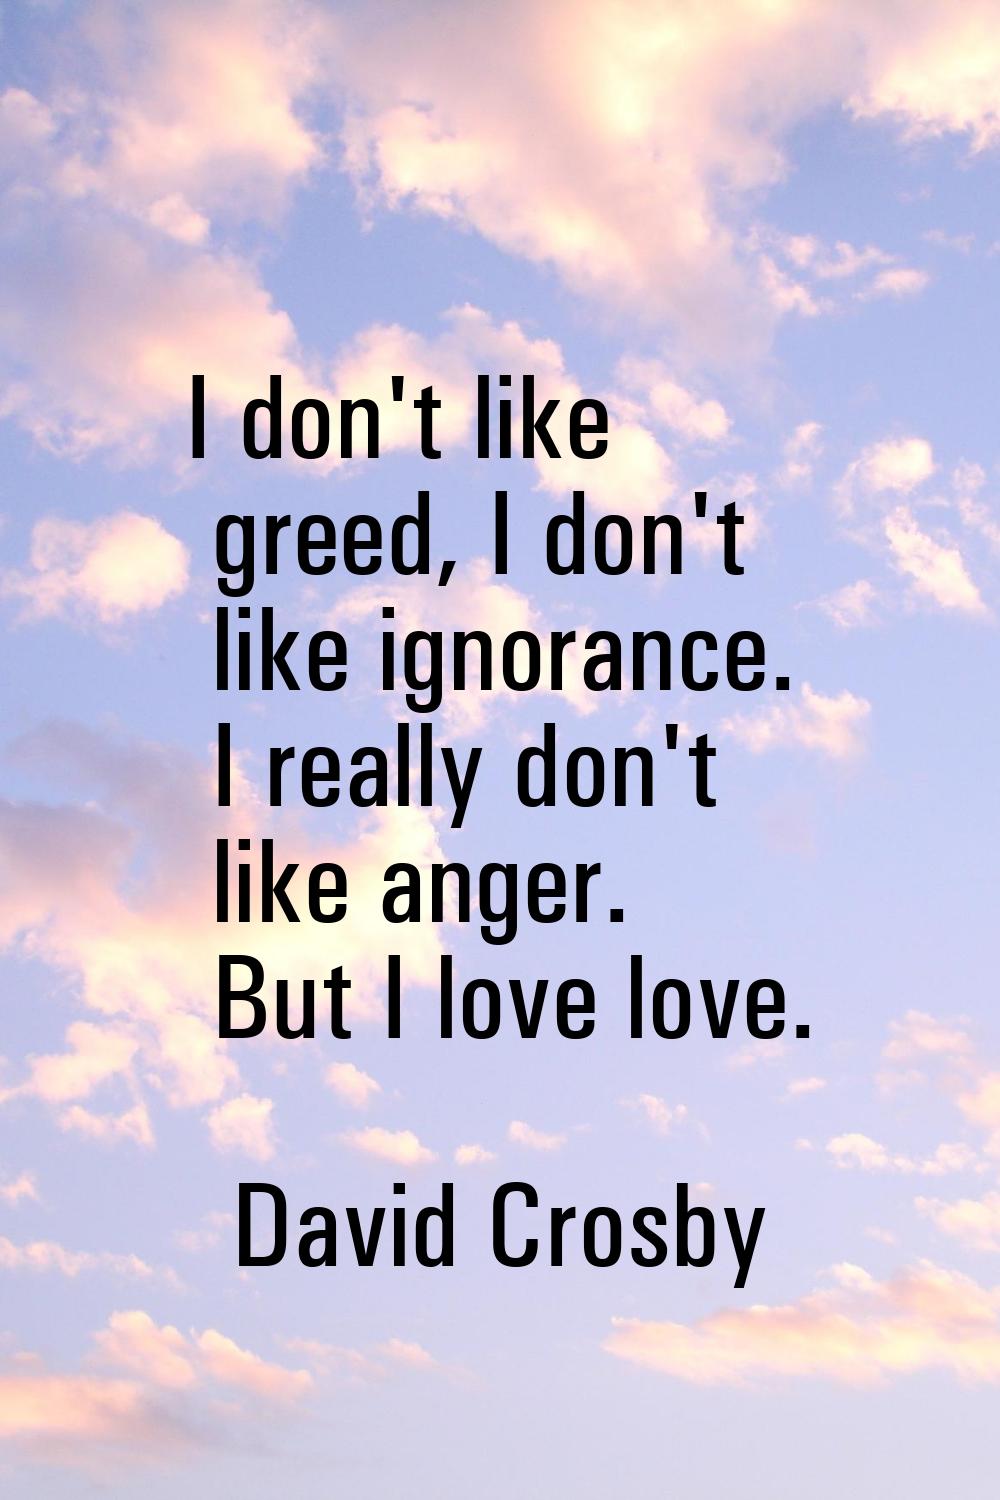 I don't like greed, I don't like ignorance. I really don't like anger. But I love love.